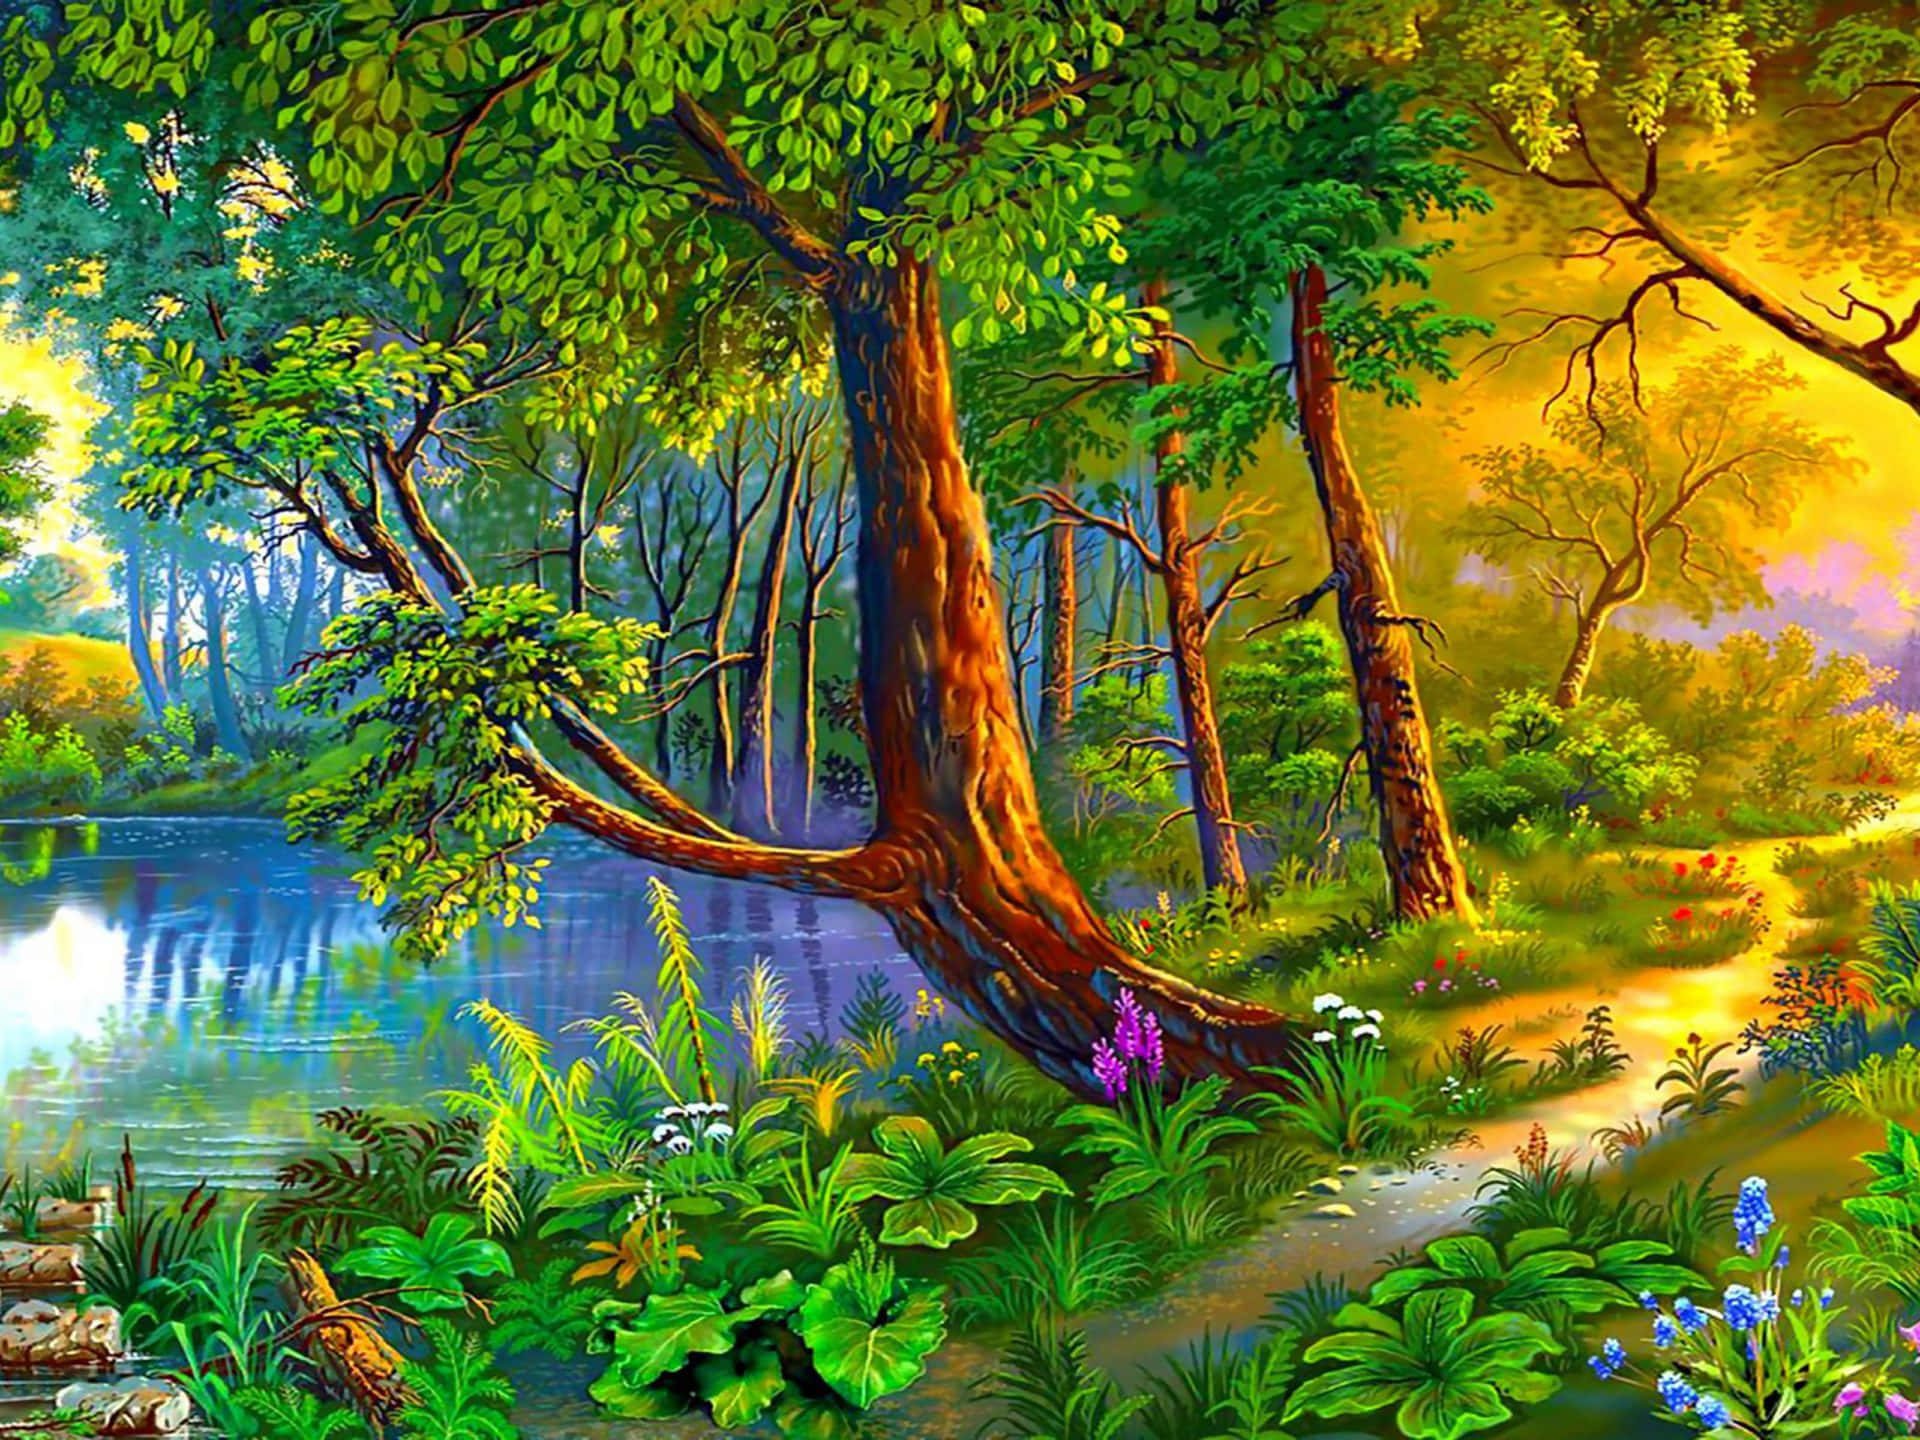 natural scenery painting wallpaper